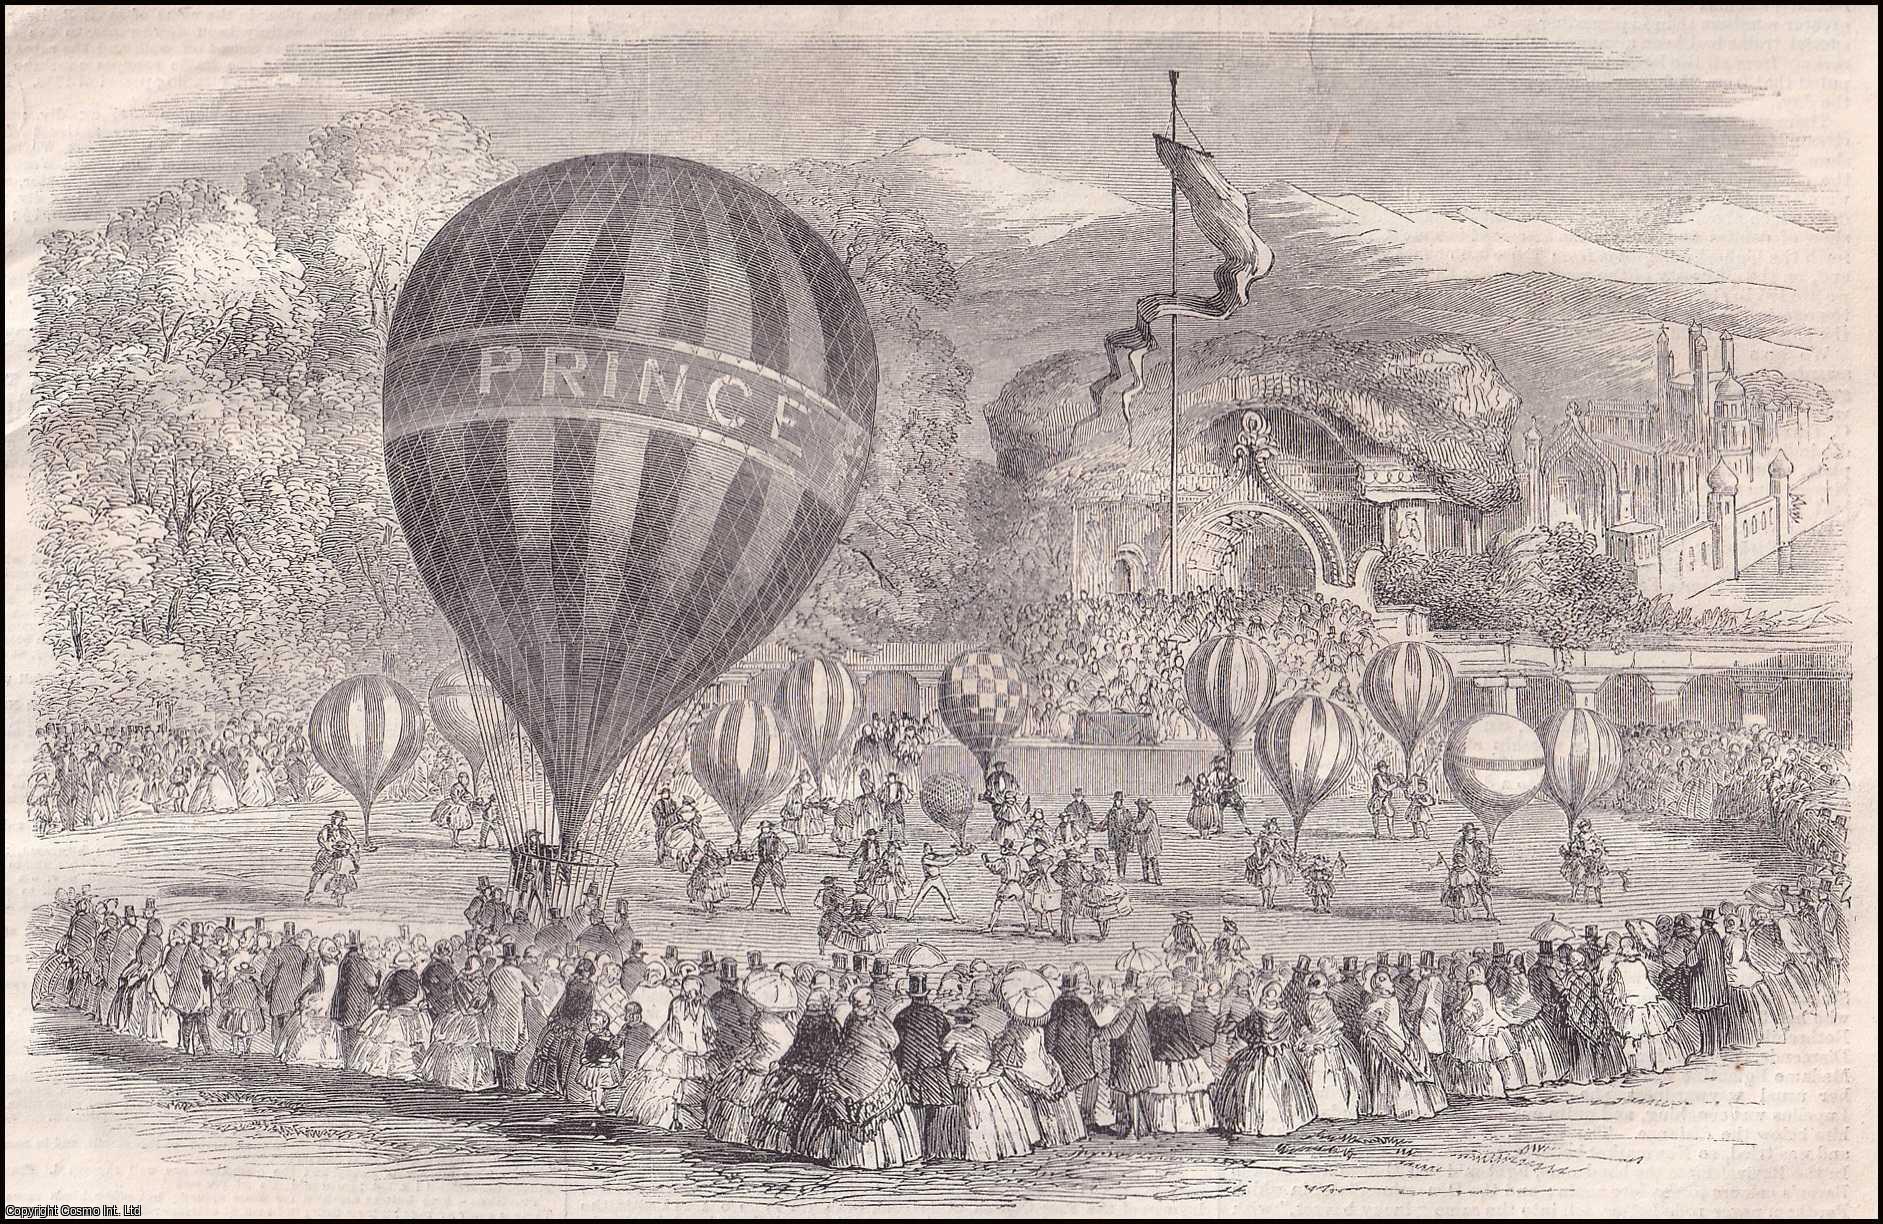 BALLOONING - Ballooning at Cremorne Gardens, London. An original print from the Illustrated London News, 1859.